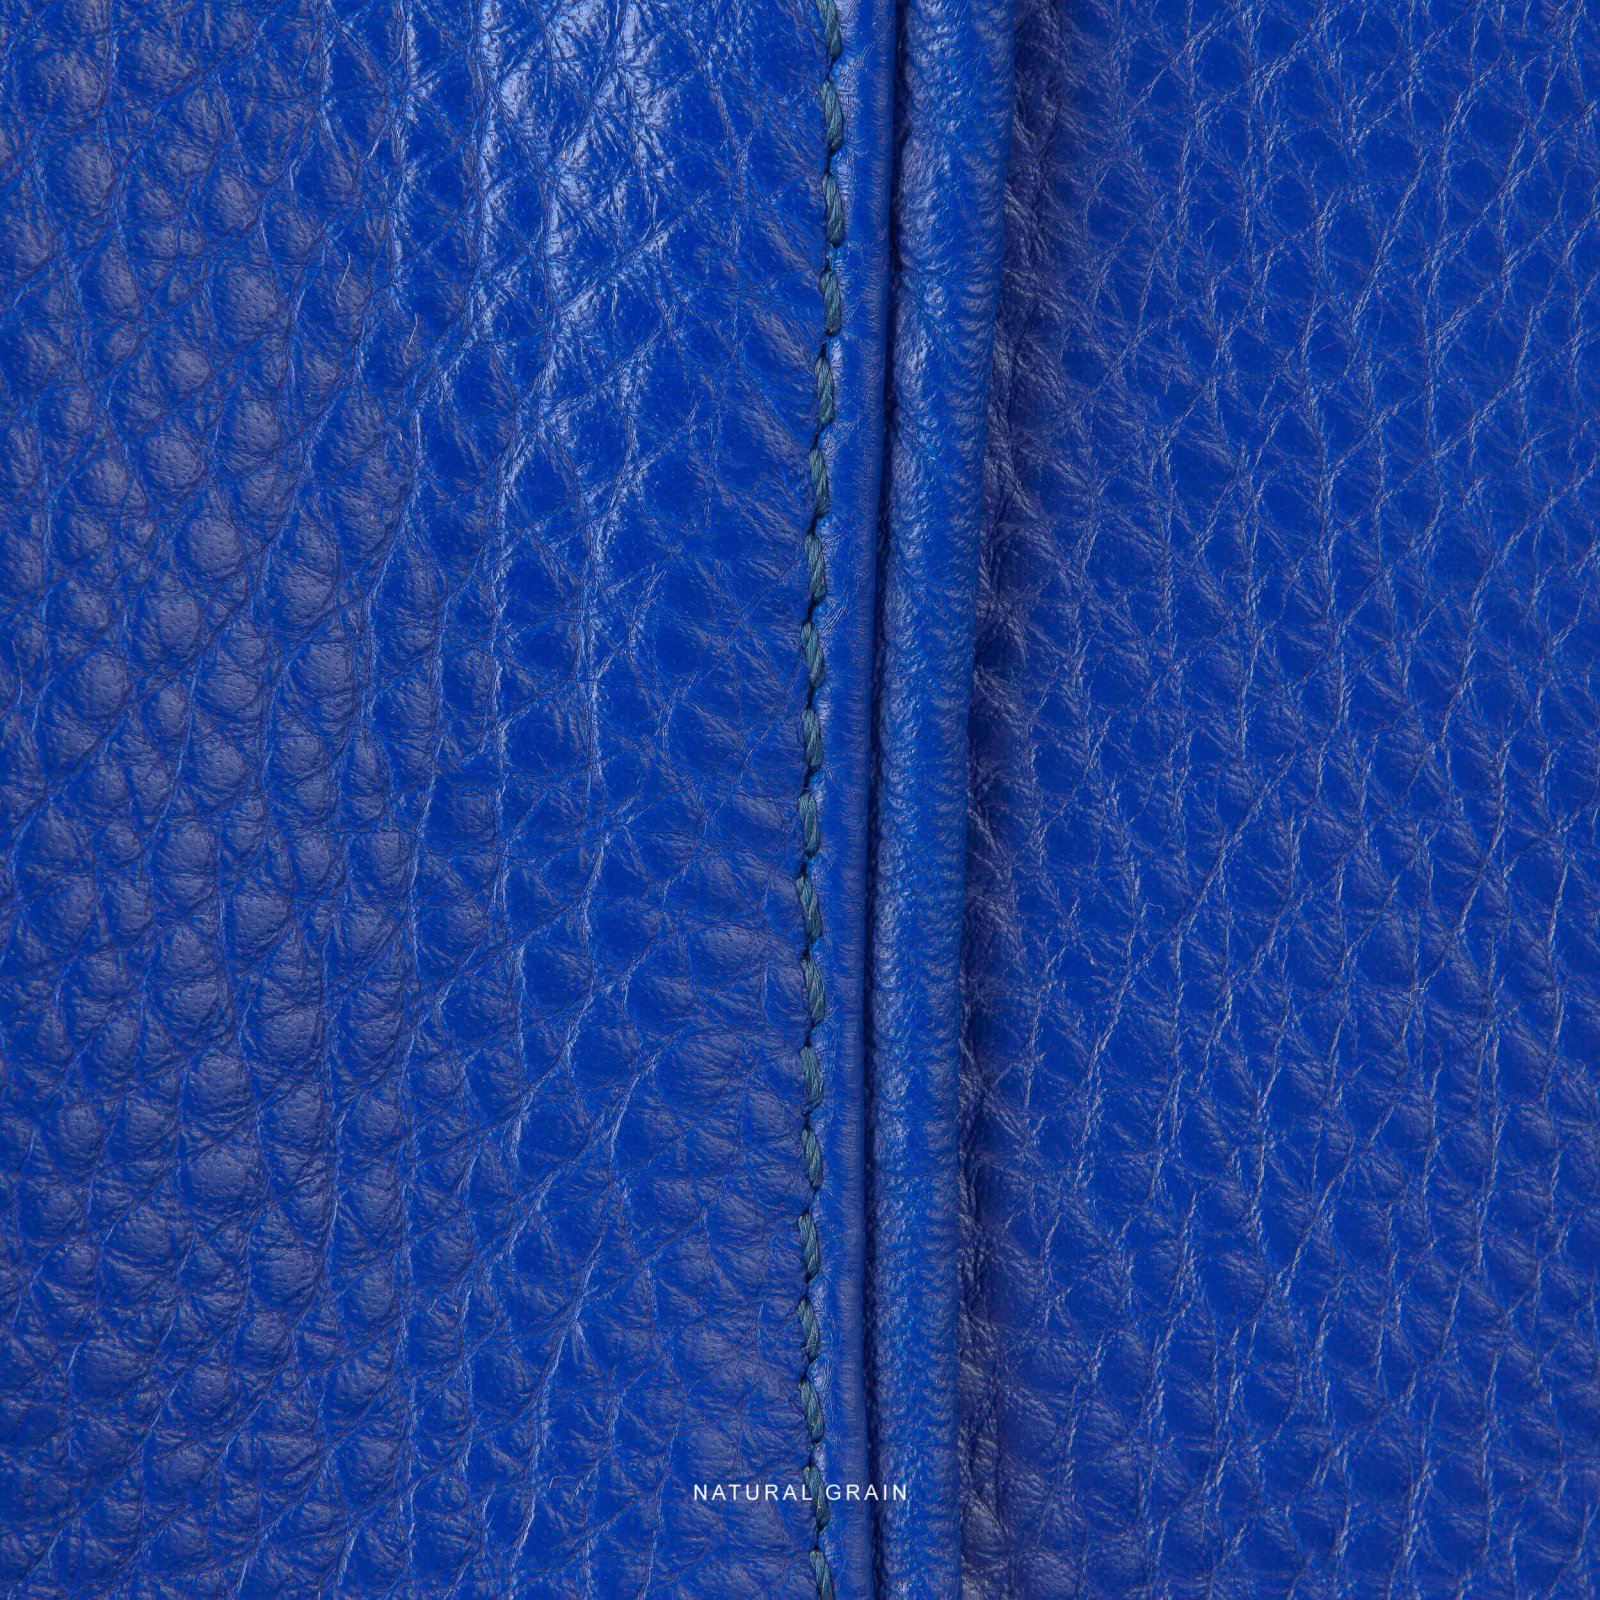 Minimal Tote Bag JAXSEN Blueberry - WYE MATTER official website